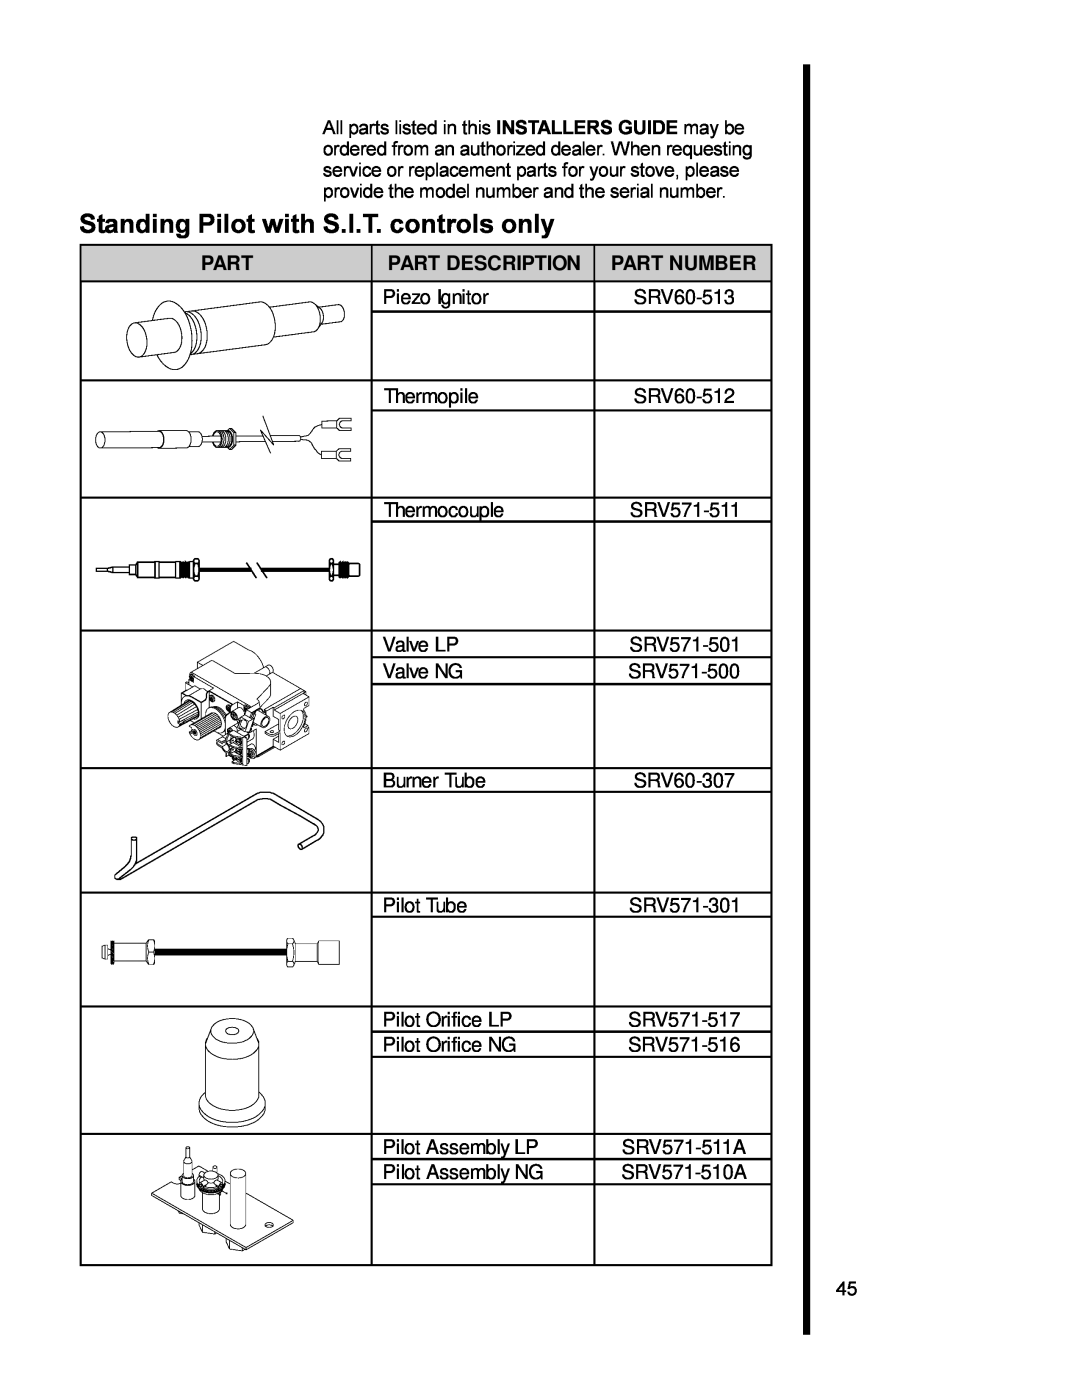 Heat & Glo LifeStyle 6000TR, 6000XLT-CDN manual Standing Pilot with S.I.T. controls only, Part Description, Part Number 